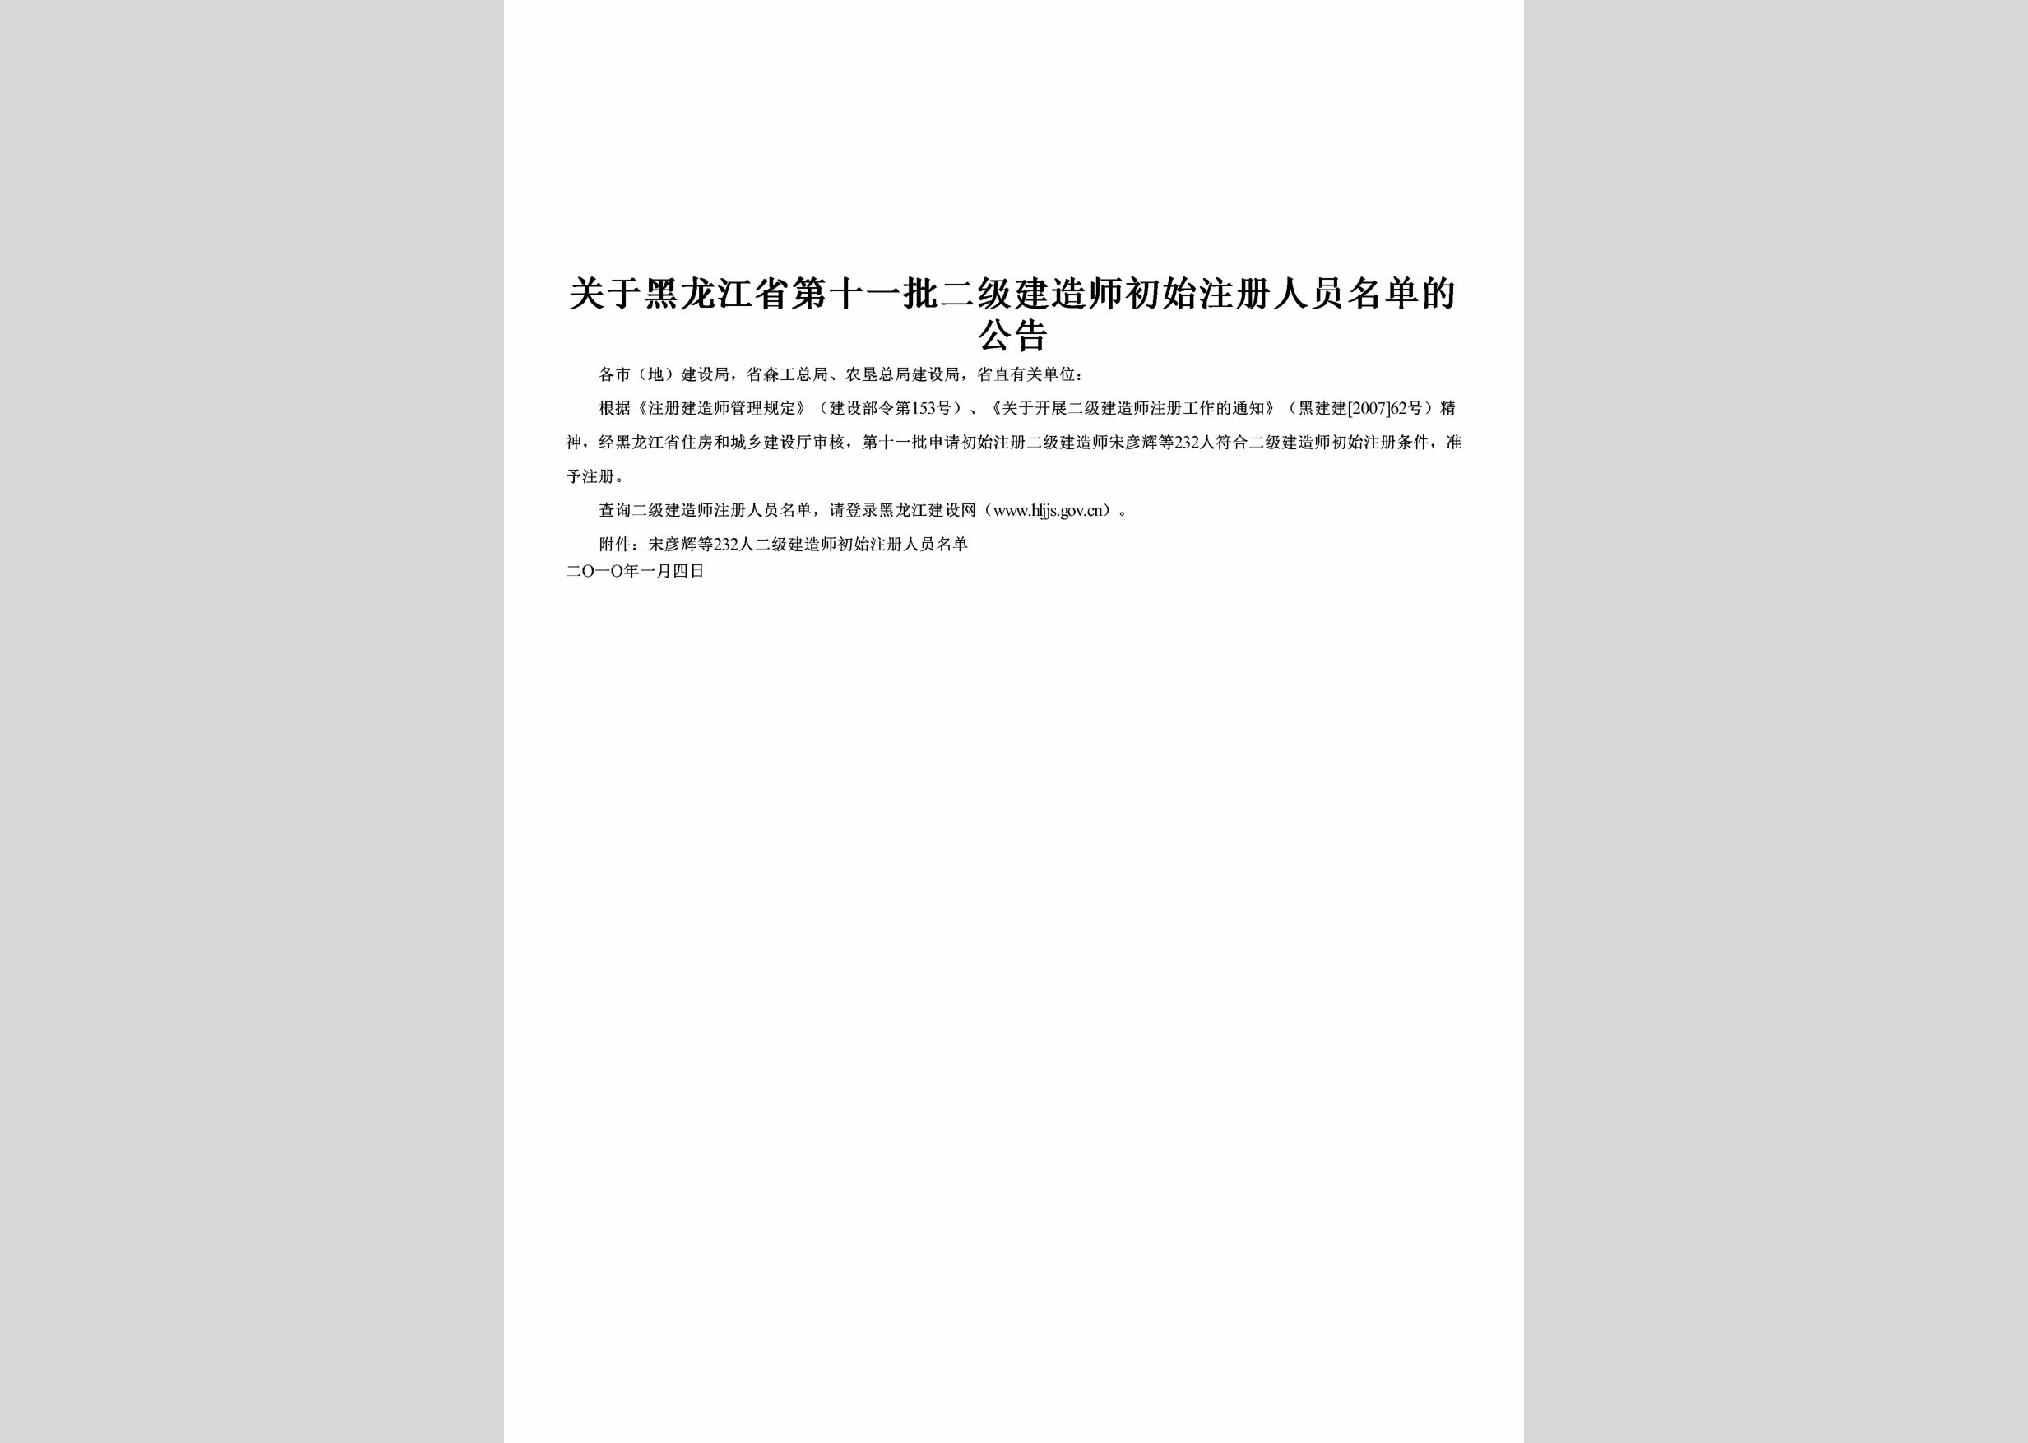 HLJ-SYPJZSGG-2010：关于黑龙江省第十一批二级建造师初始注册人员名单的公告